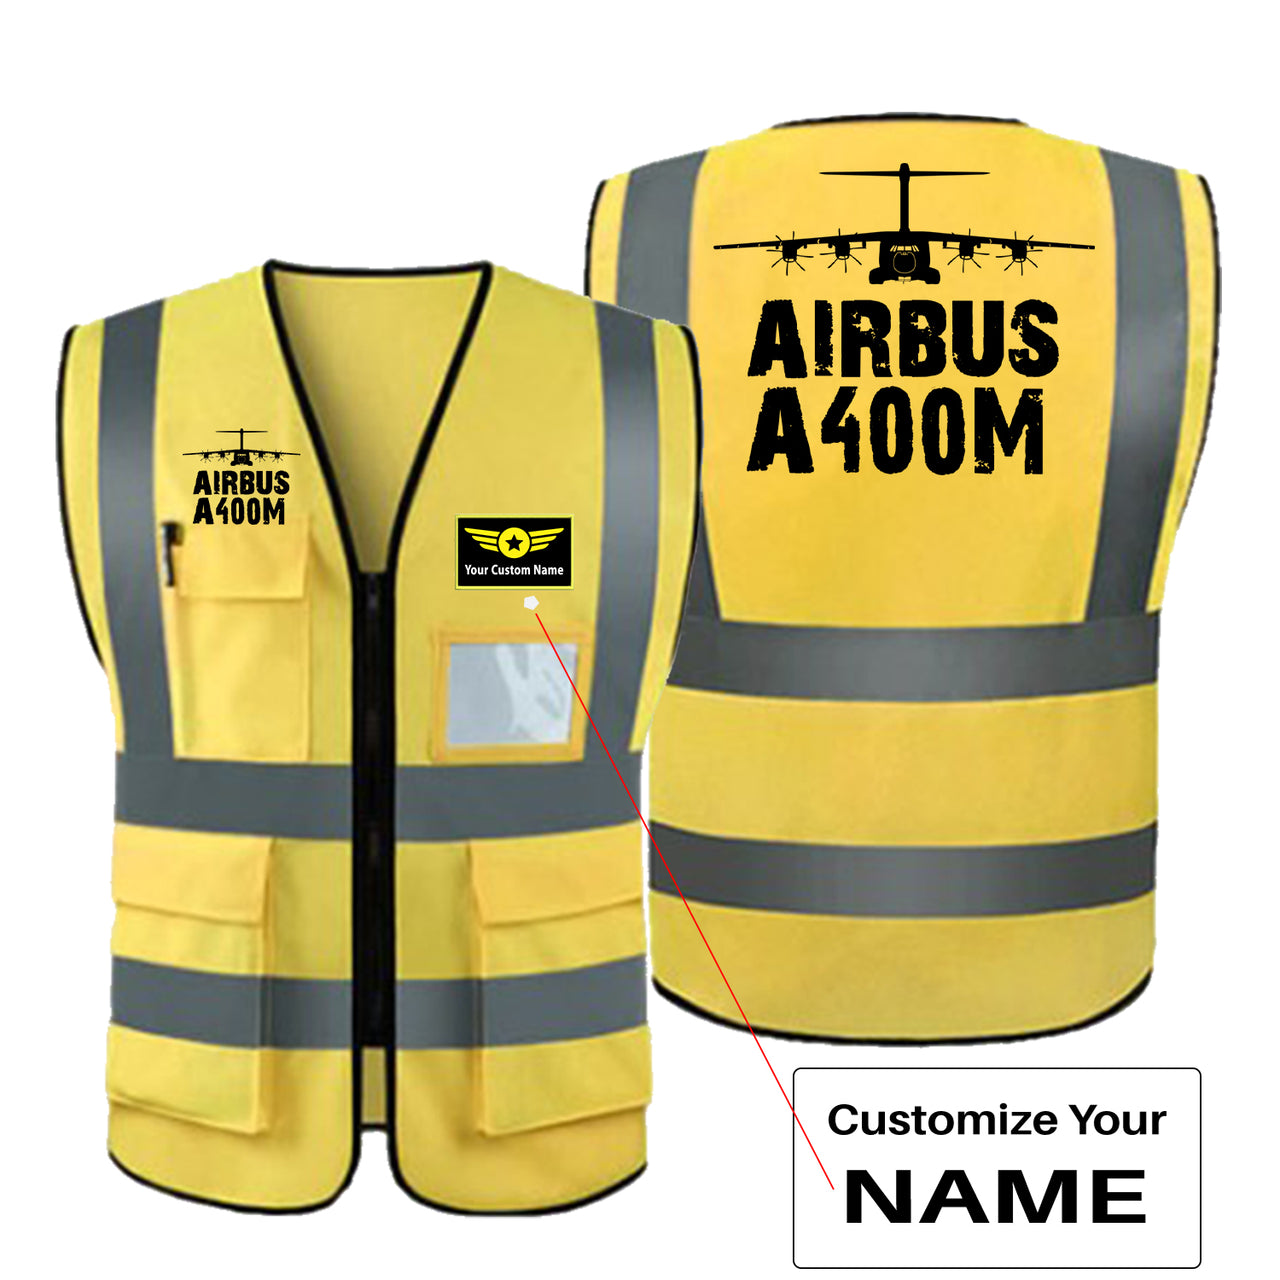 Airbus A400M & Plane Designed Reflective Vests